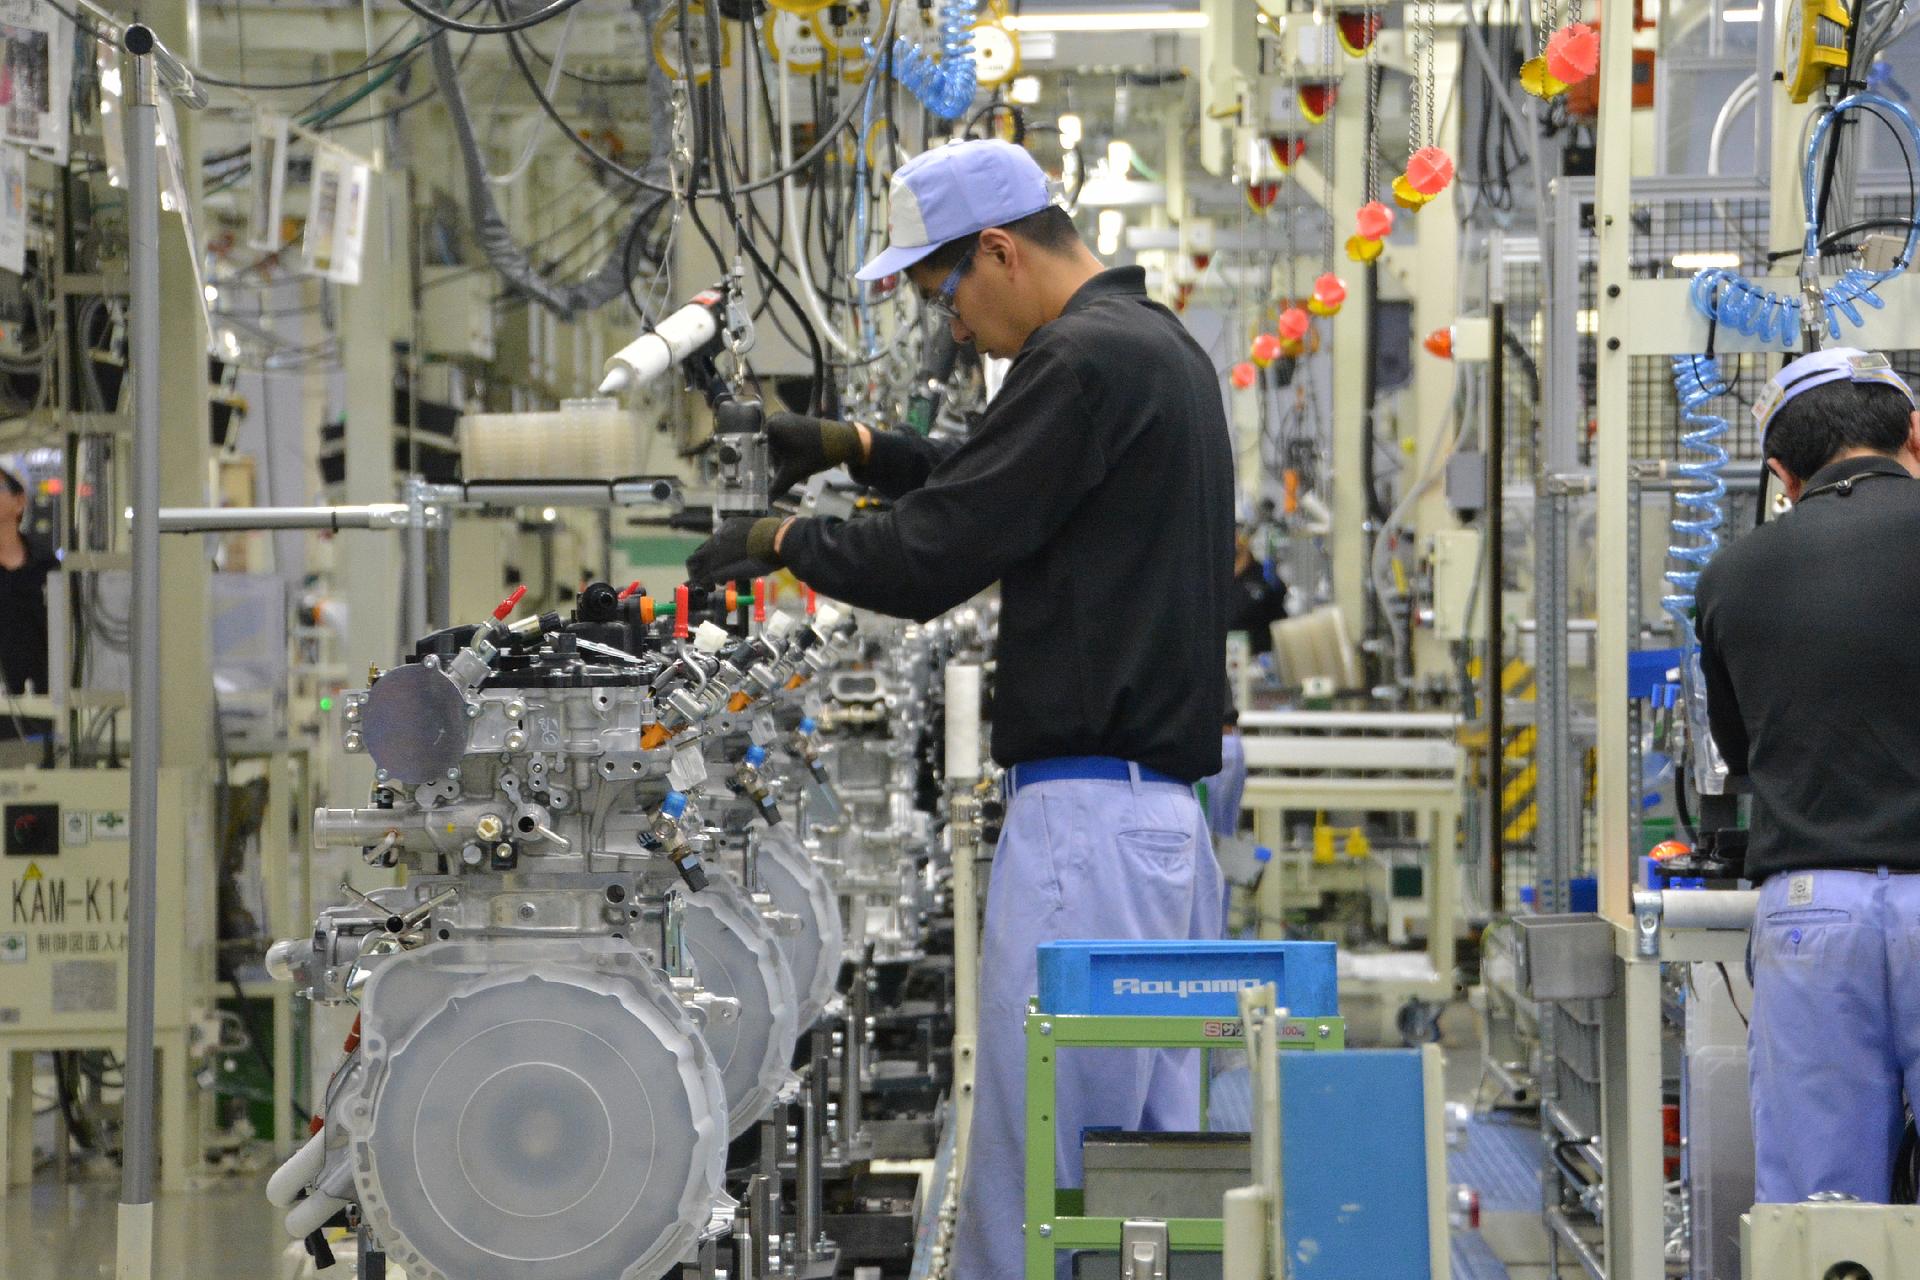 Lexus NX turbo engine being assembled at Kanda Plant, Kyushu